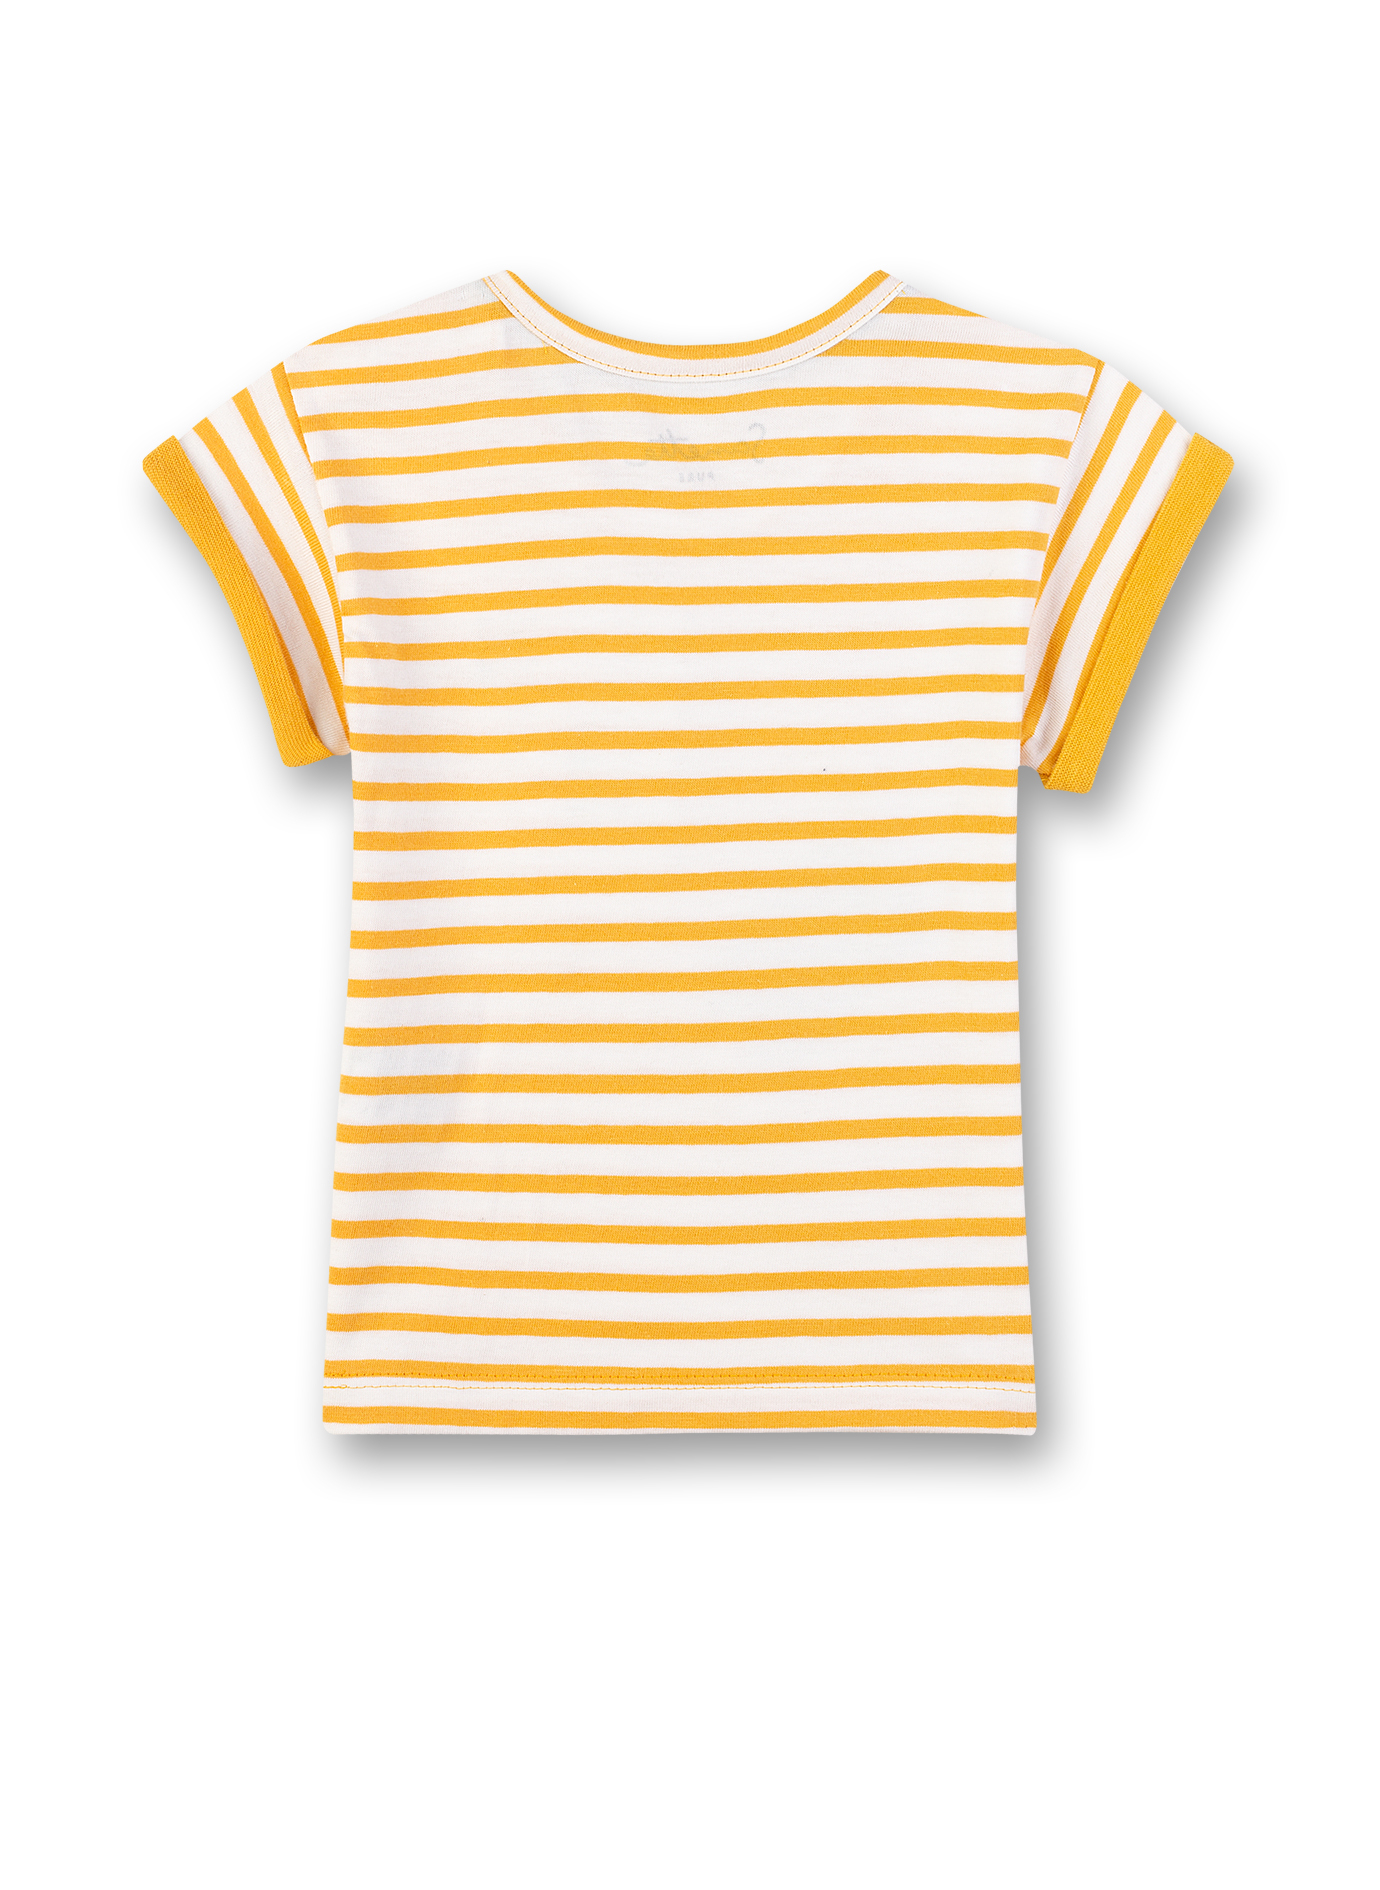 Unisex T-Shirt Gelb-geringelt